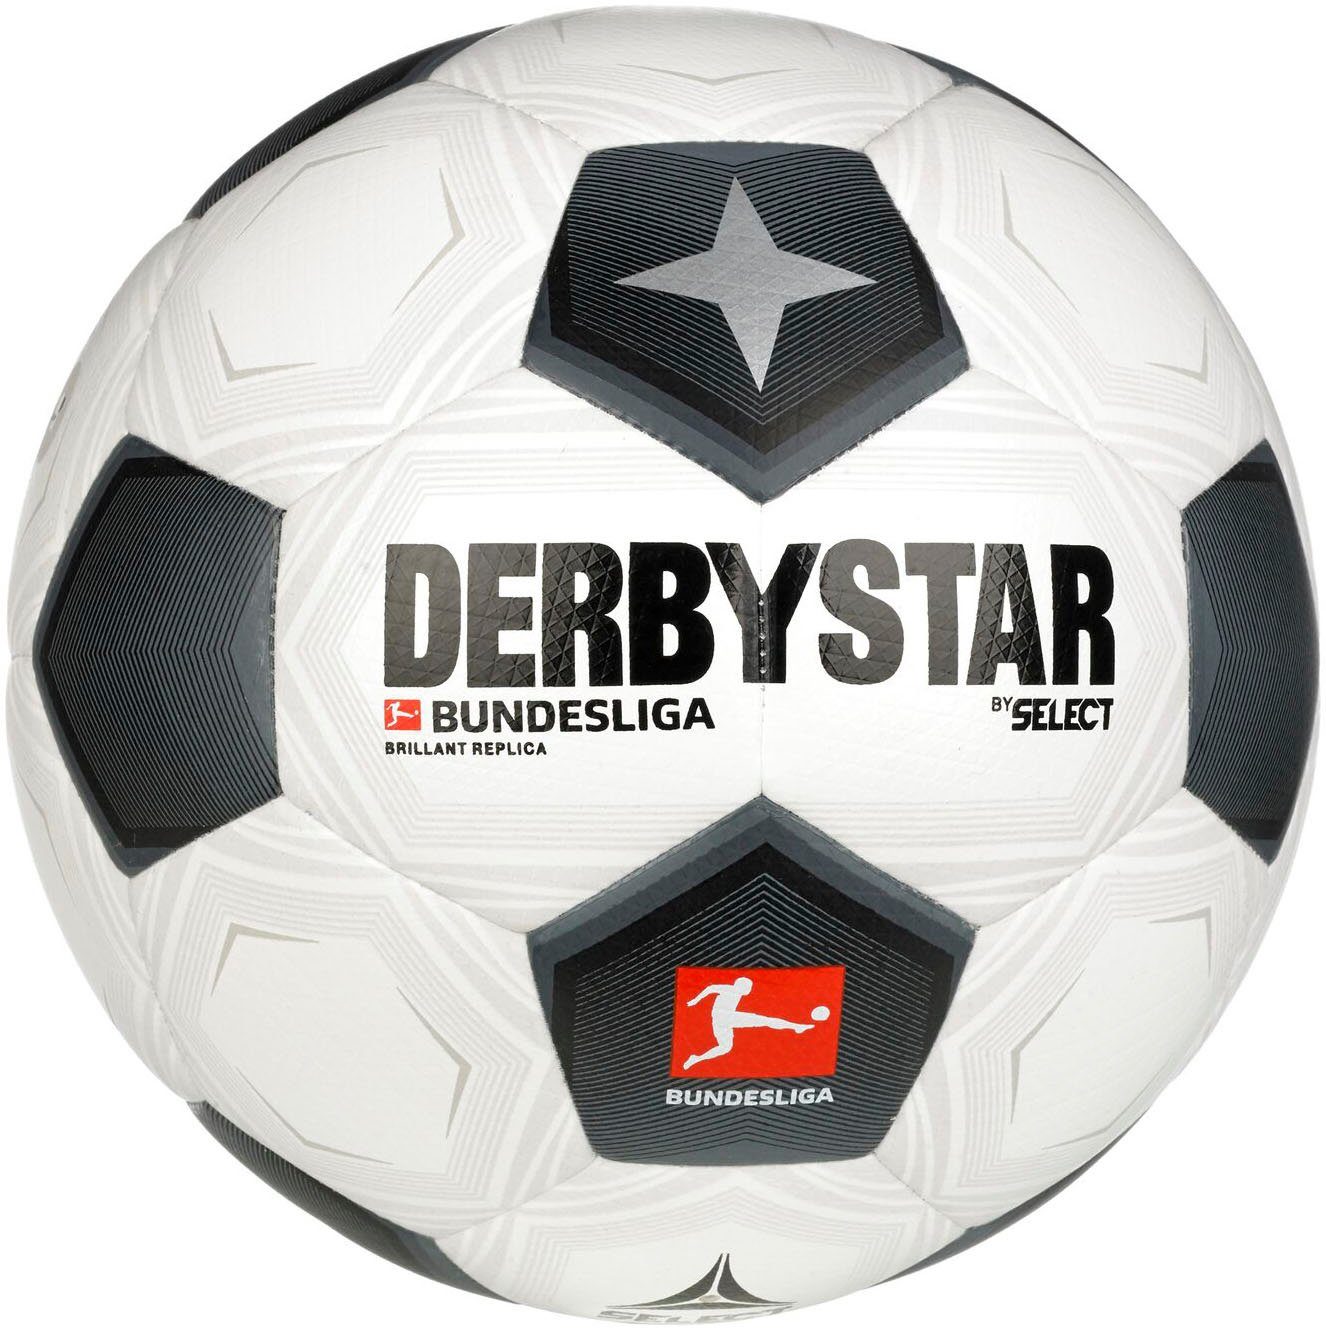 Derbystar Fußball Bundesliga Classic Replica Brillant